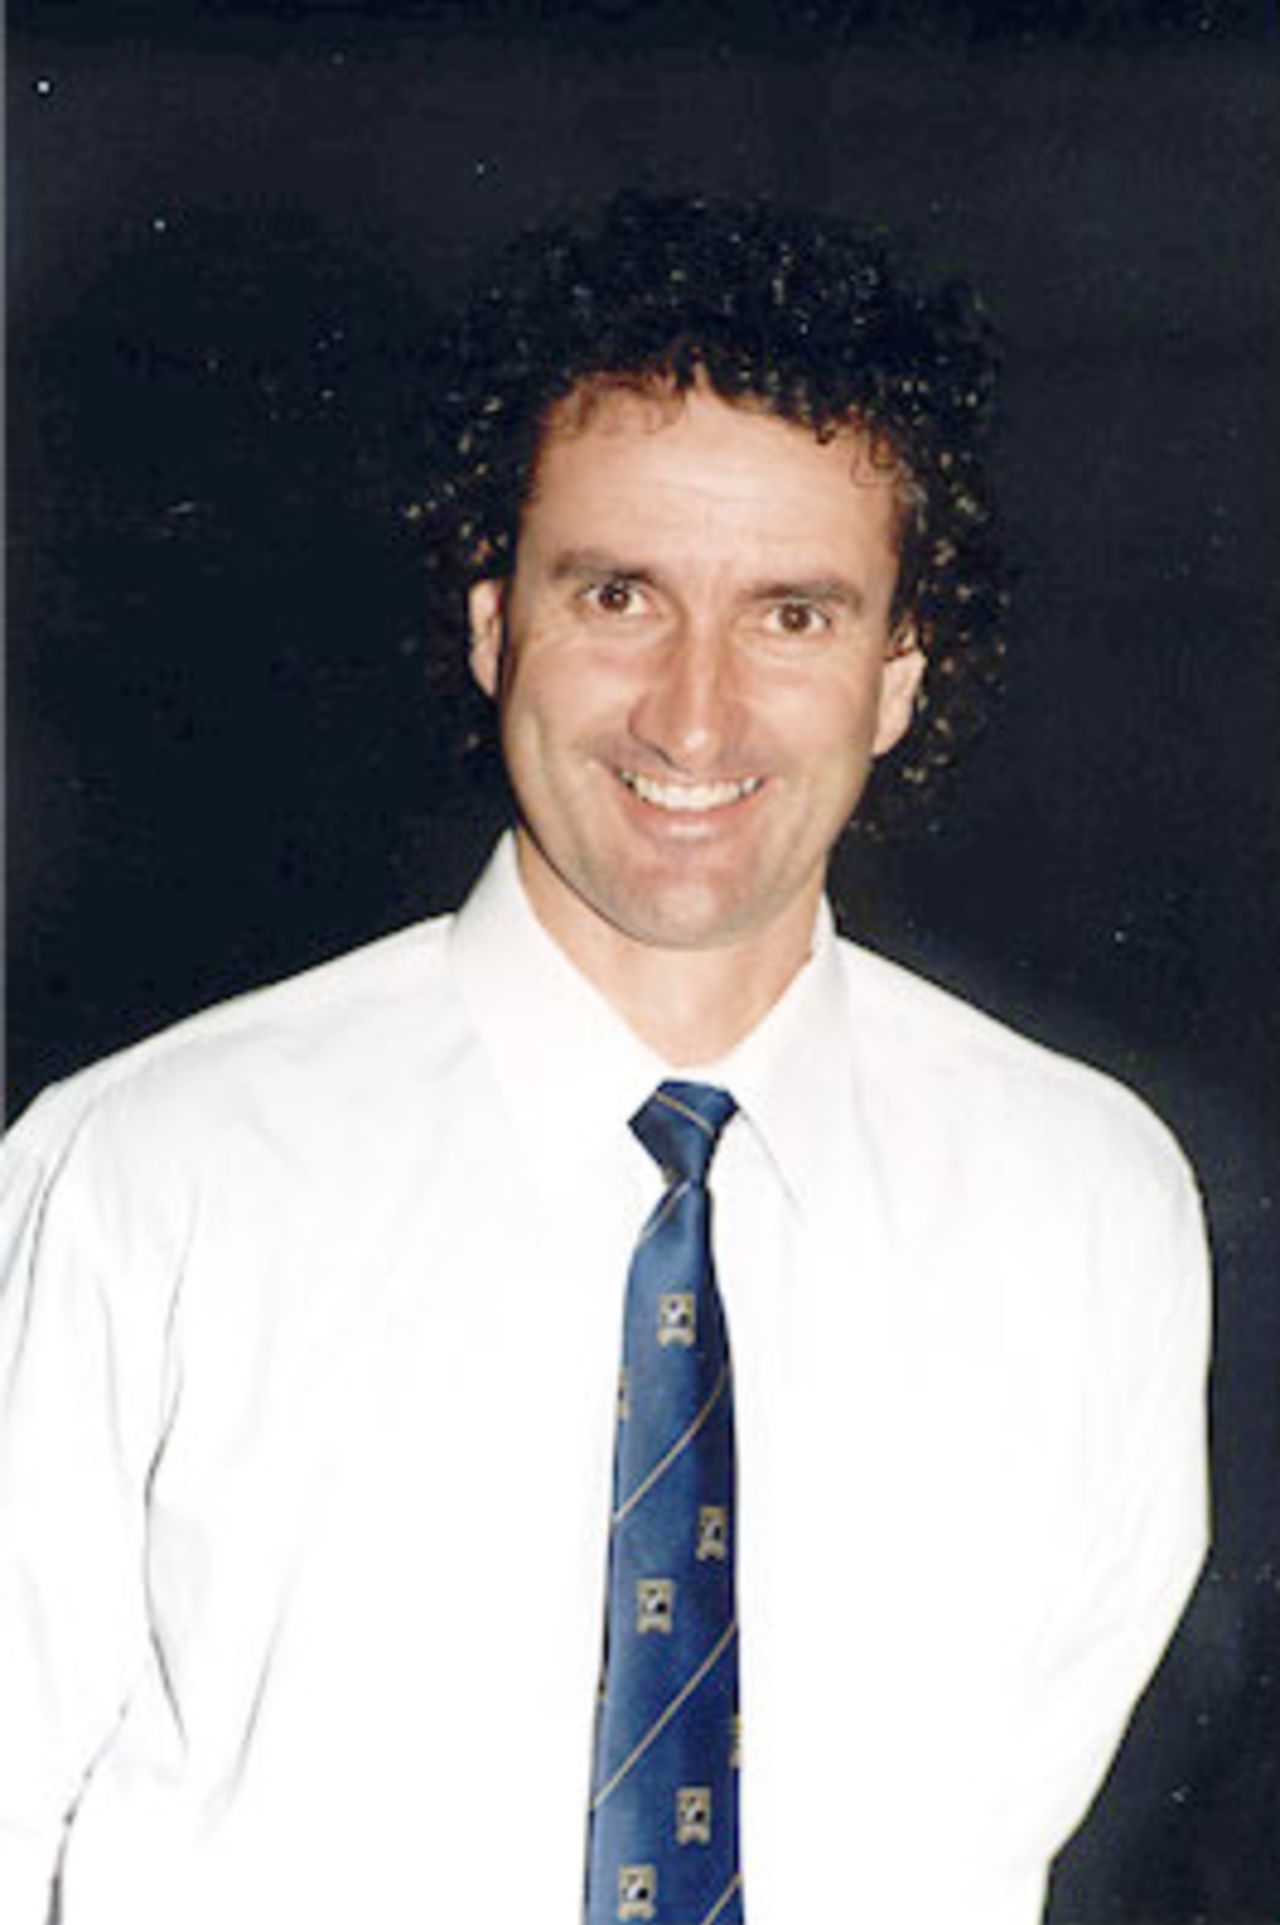 Portrait of Brent Bowden - 2000/01 New Zealand Cricket international panel umpire